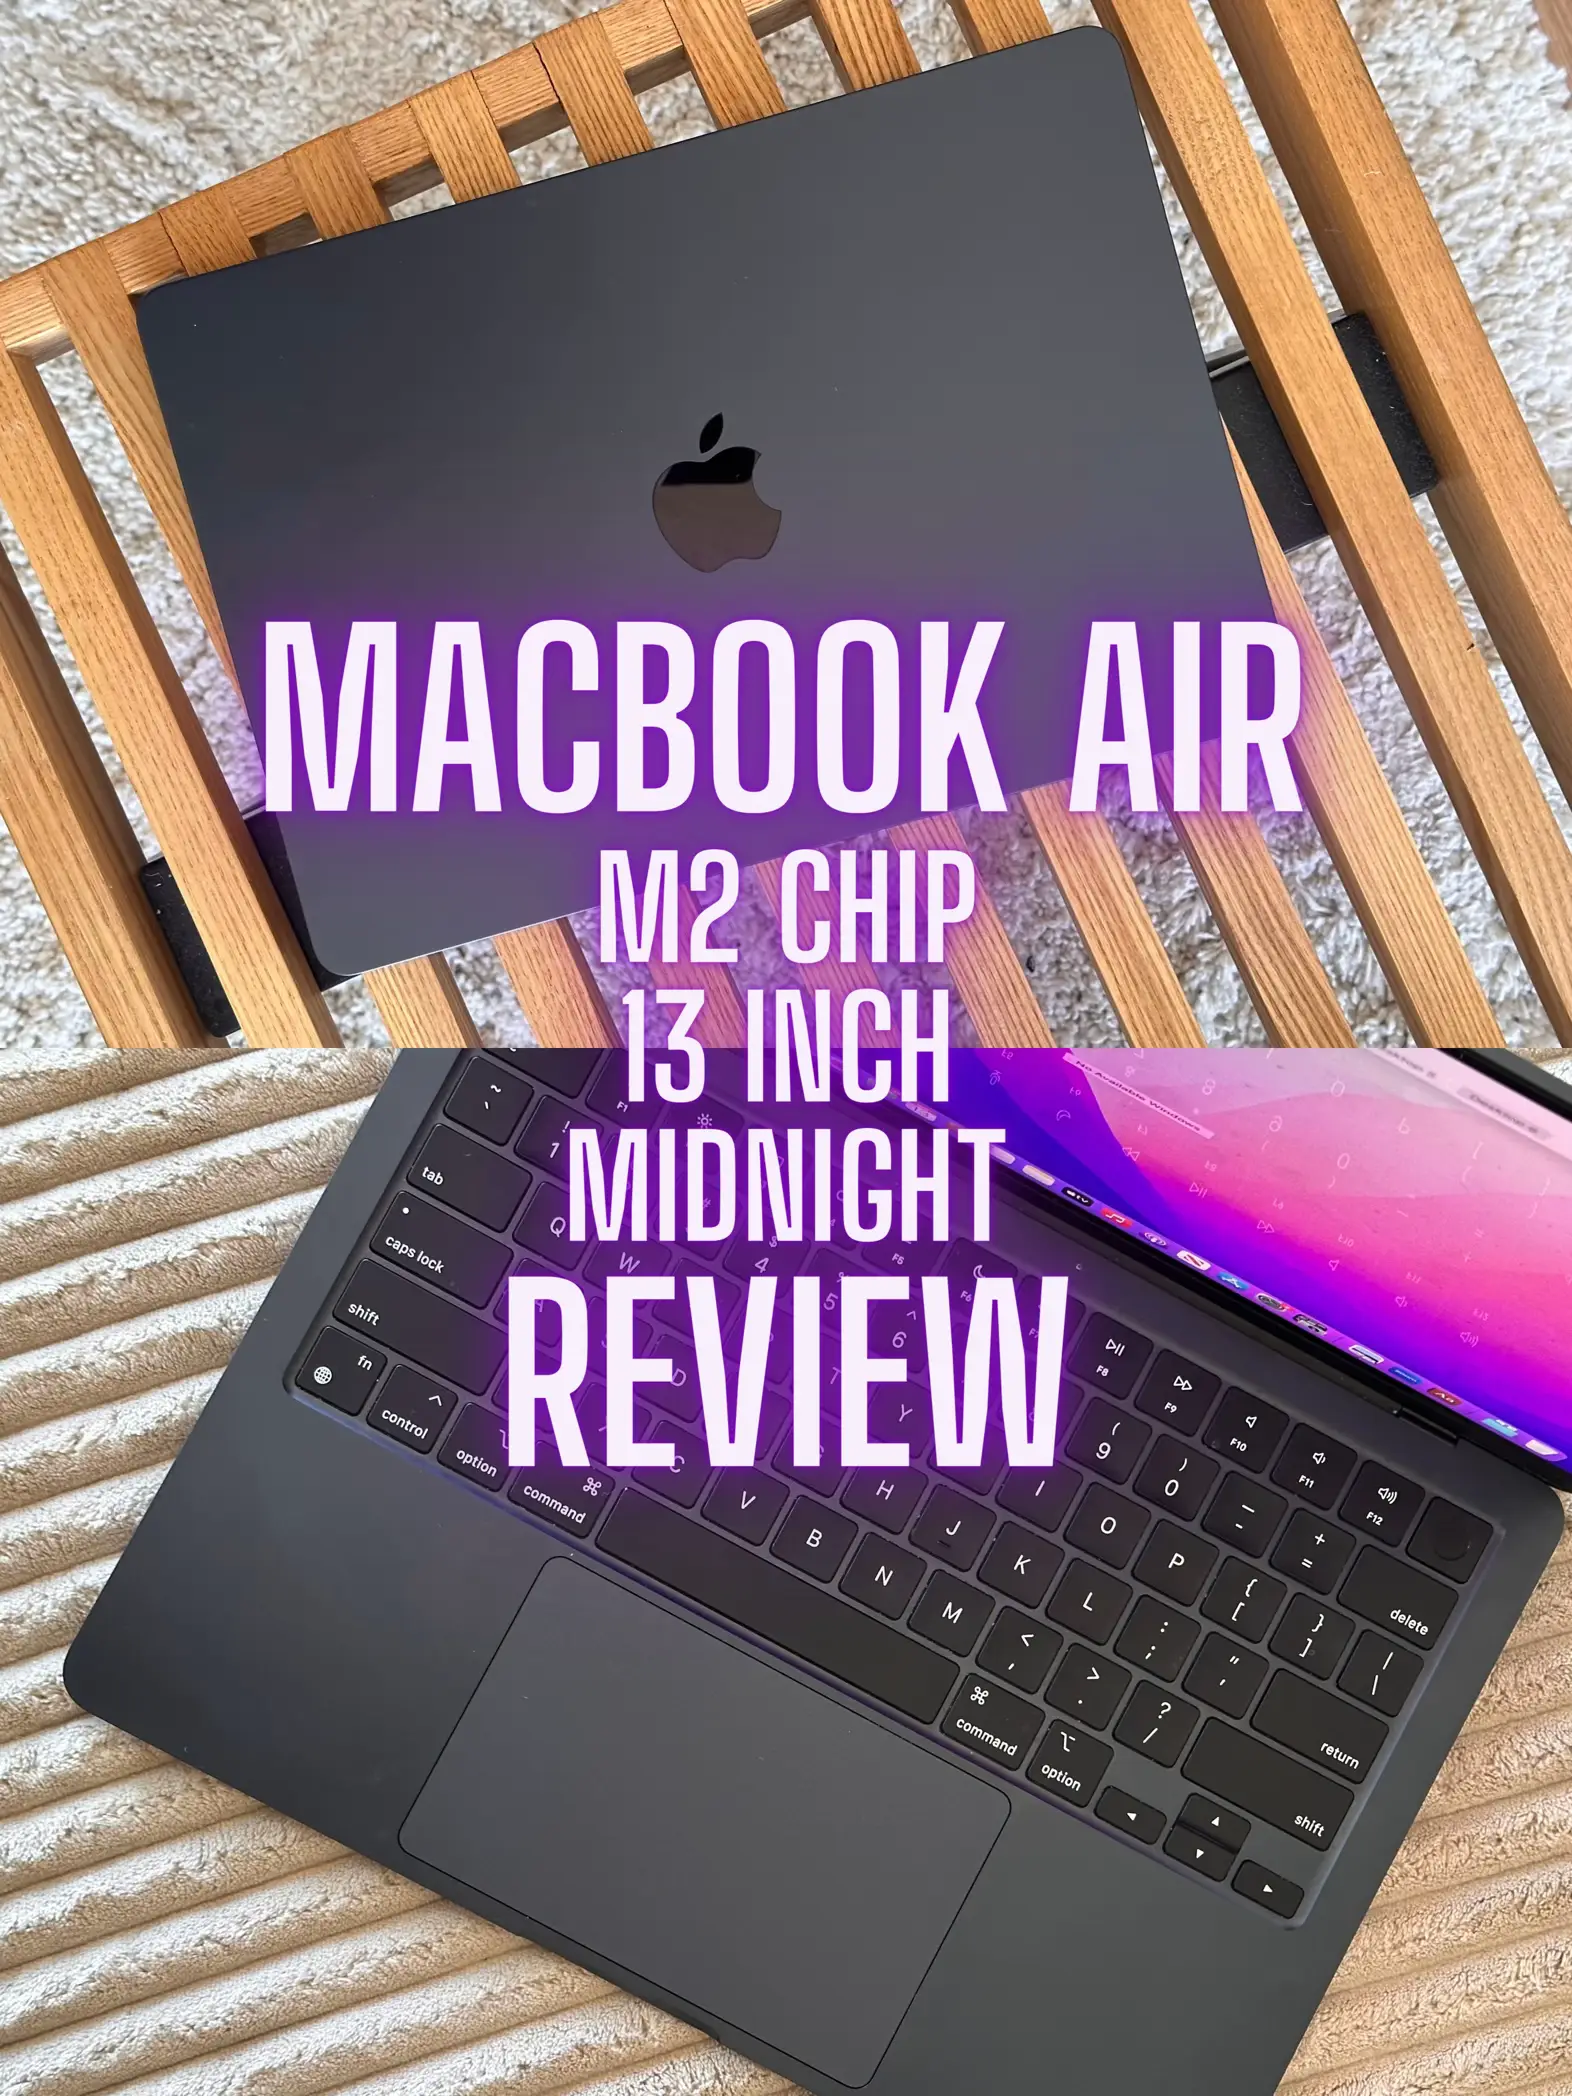 Macbook Air Release Date - Lemon8 Search